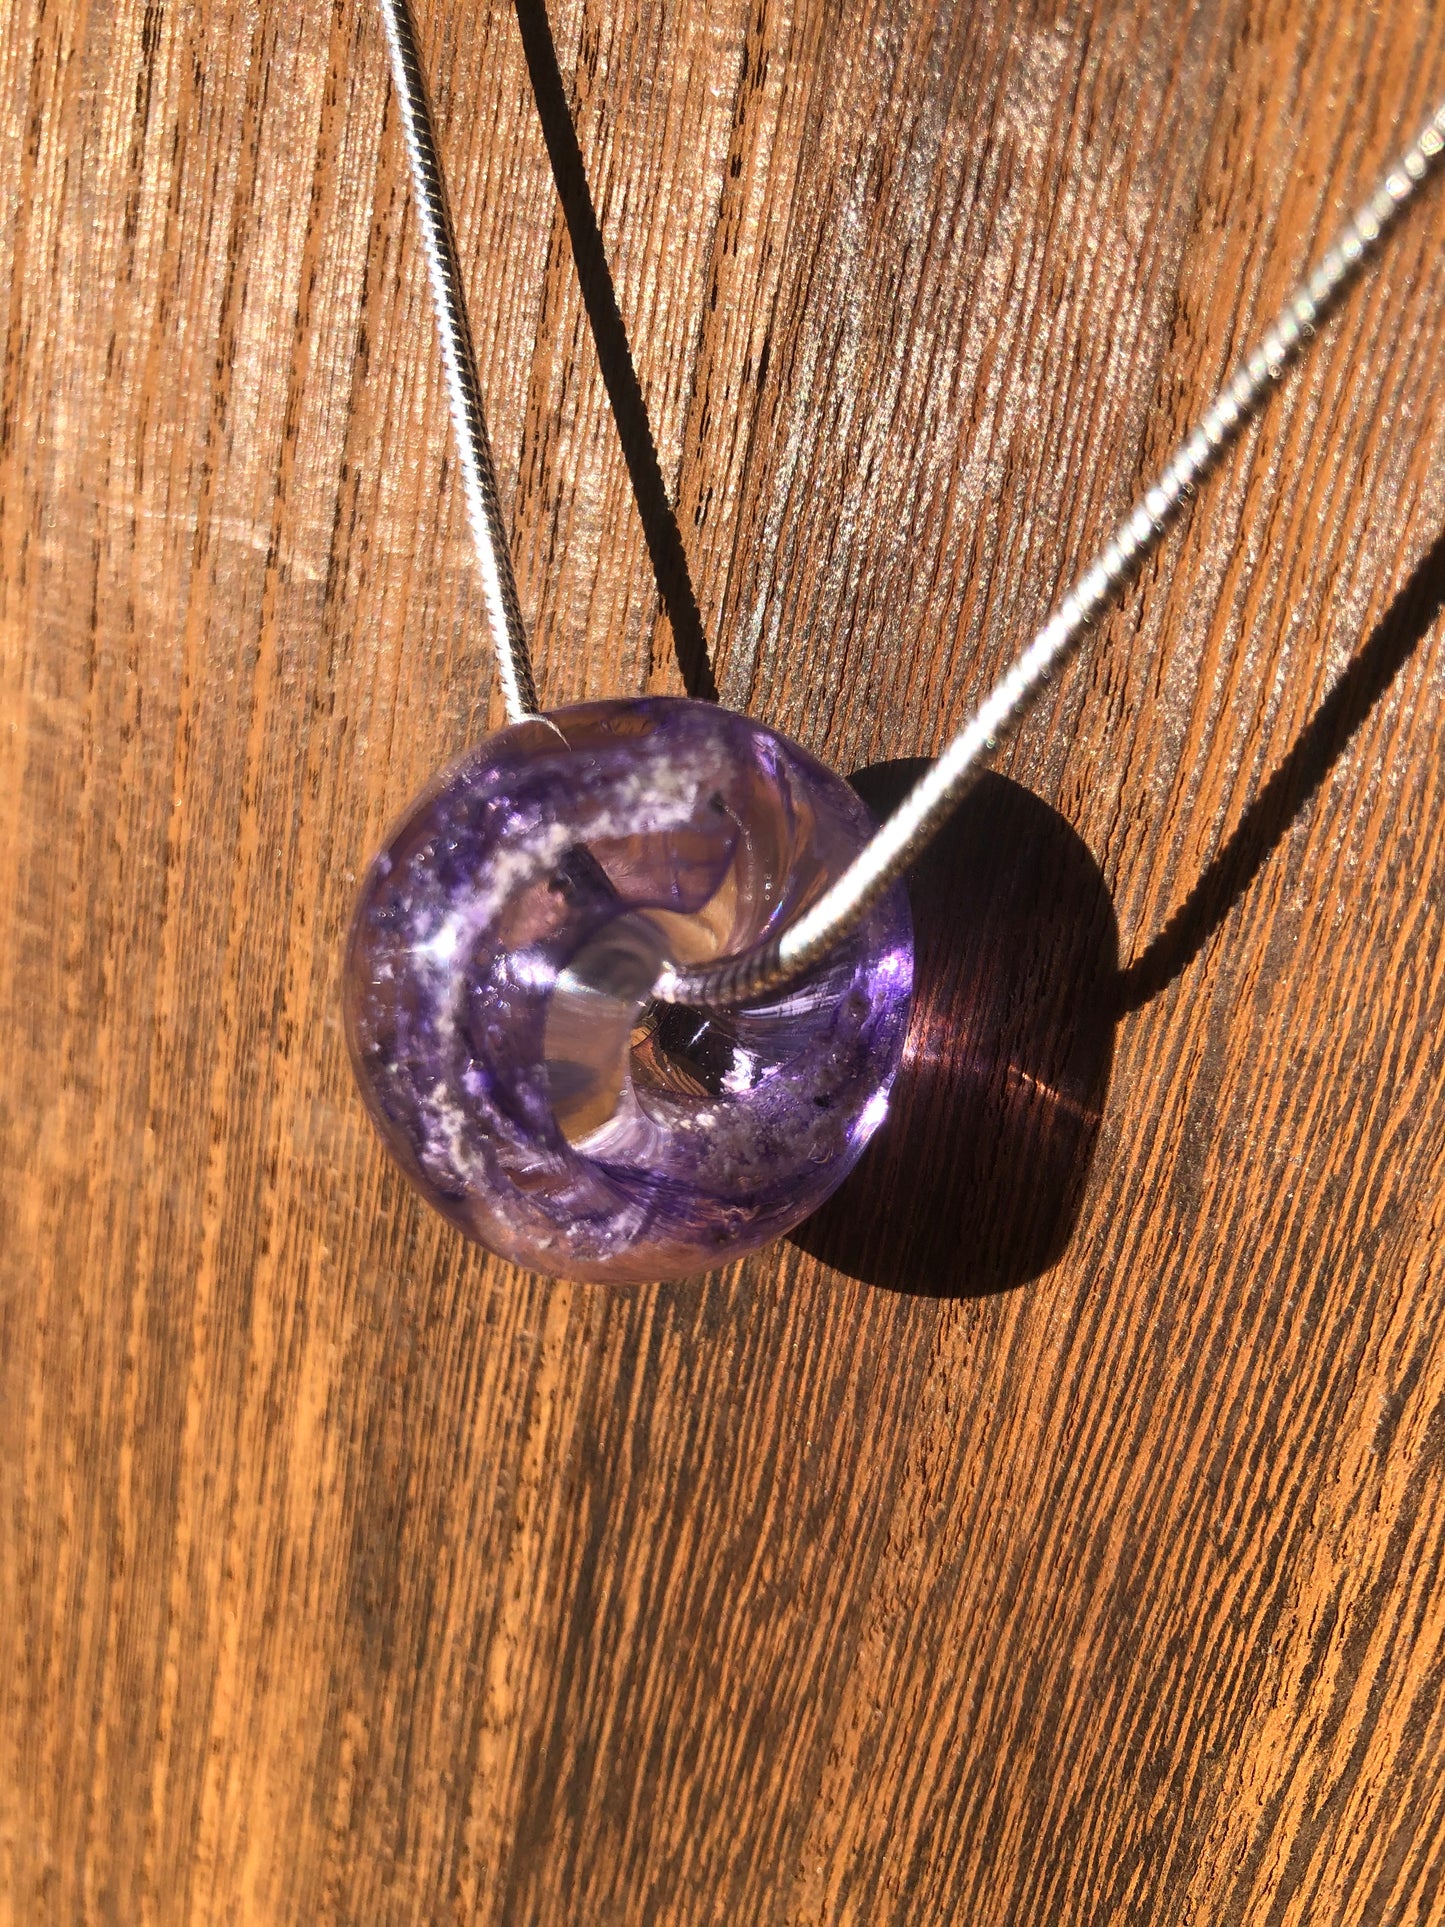 Glass Memorial Necklace